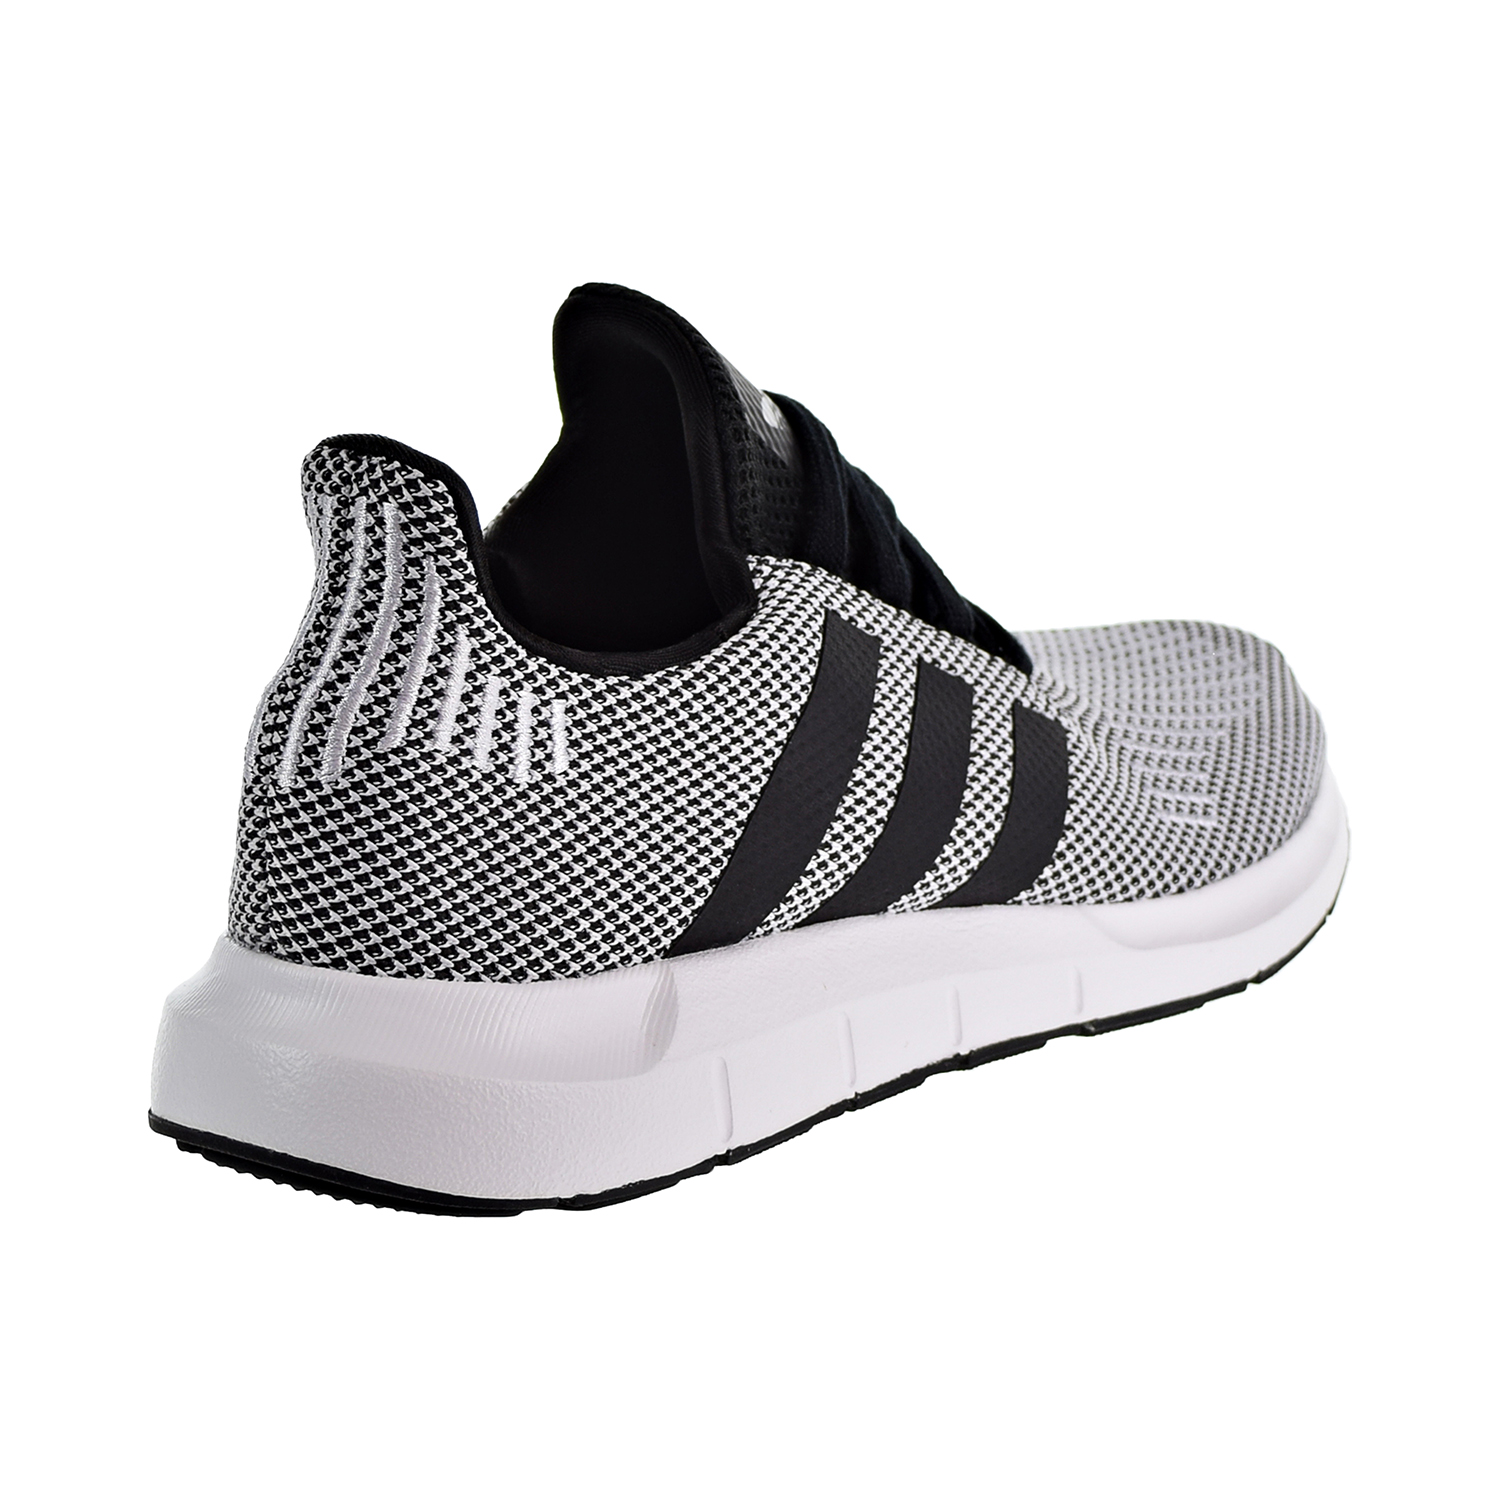 Adidas Swift Run Men's Shoes Core Black-Core Black-White B37734 | eBay